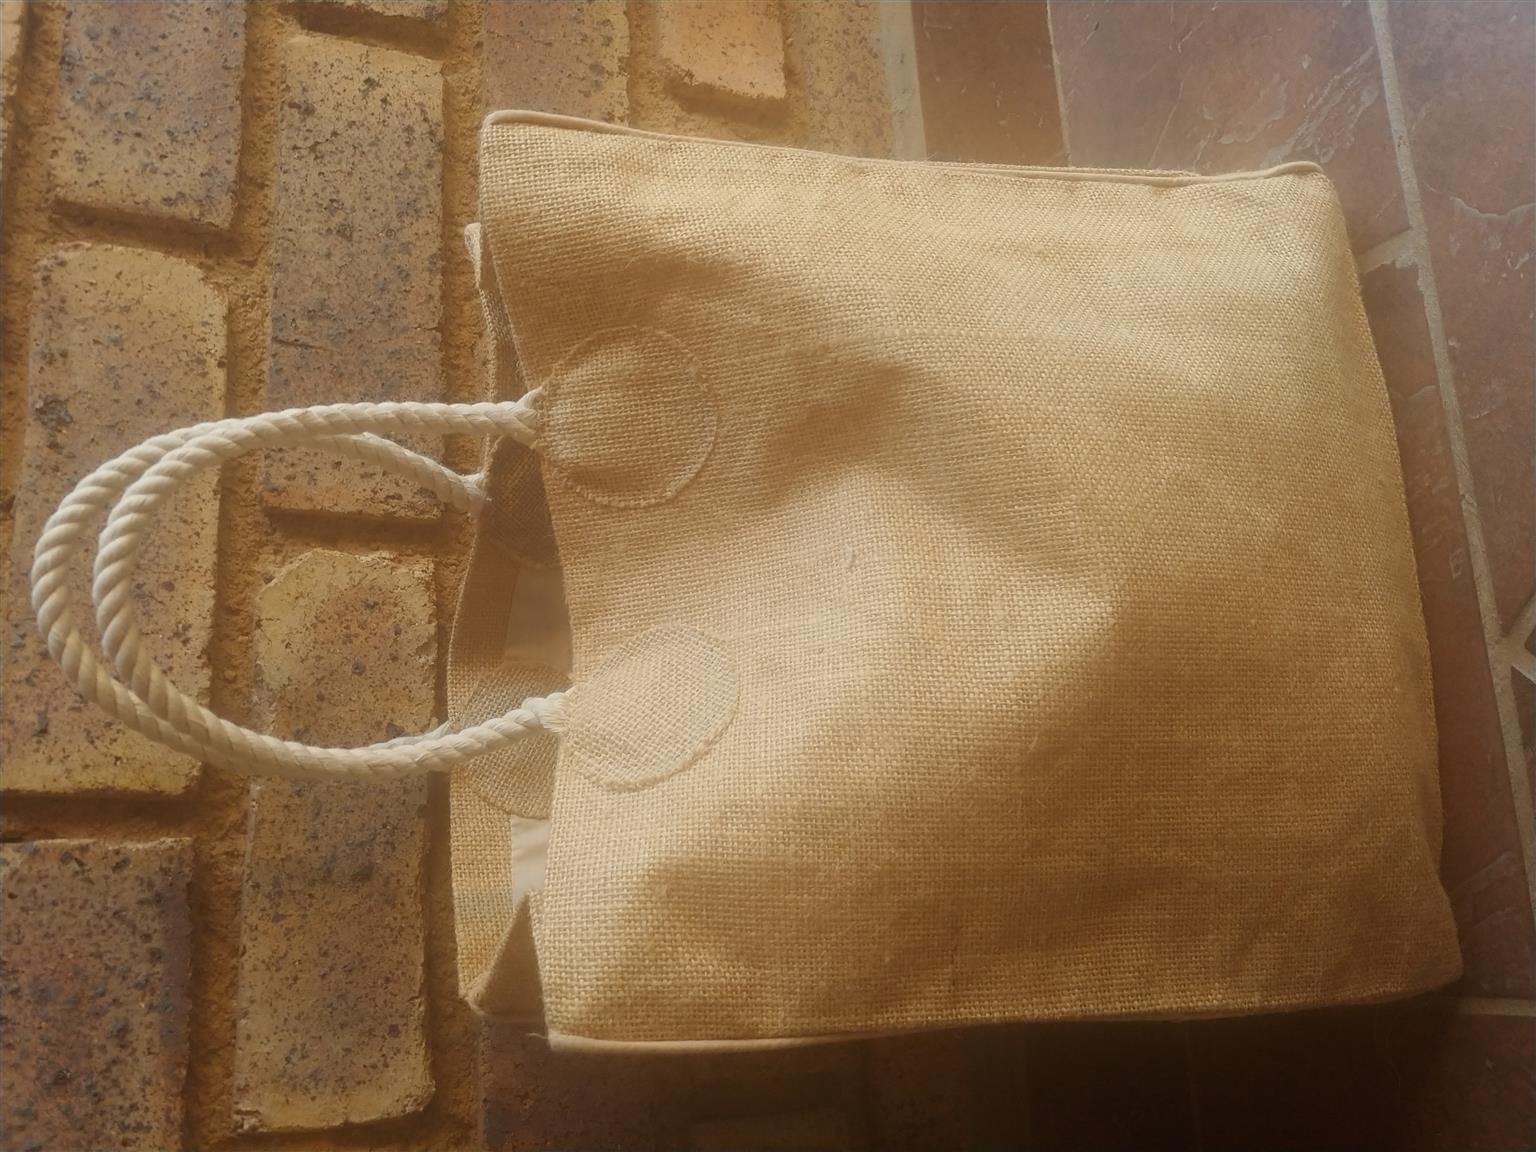 Hessian bag